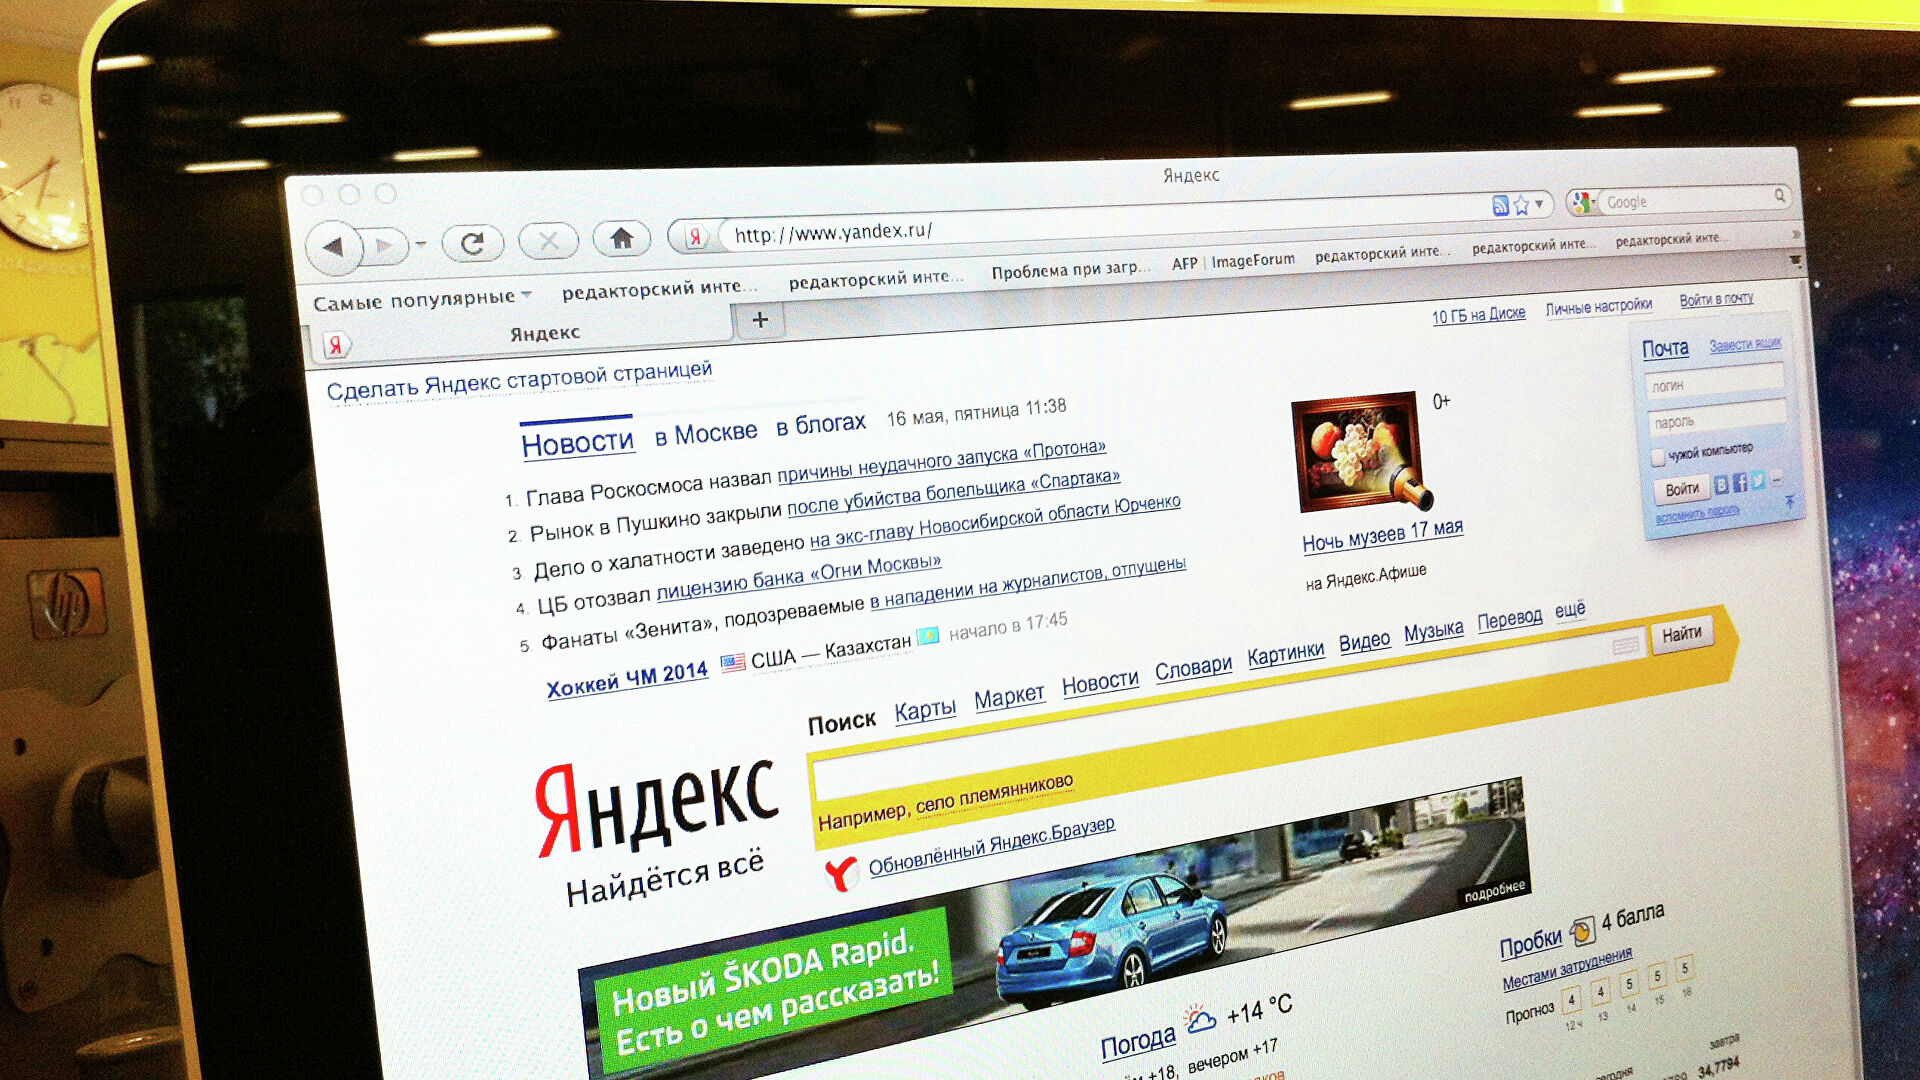 ФАС завела дело против “Яндекса” из-за дискриминации сторонних сервисов